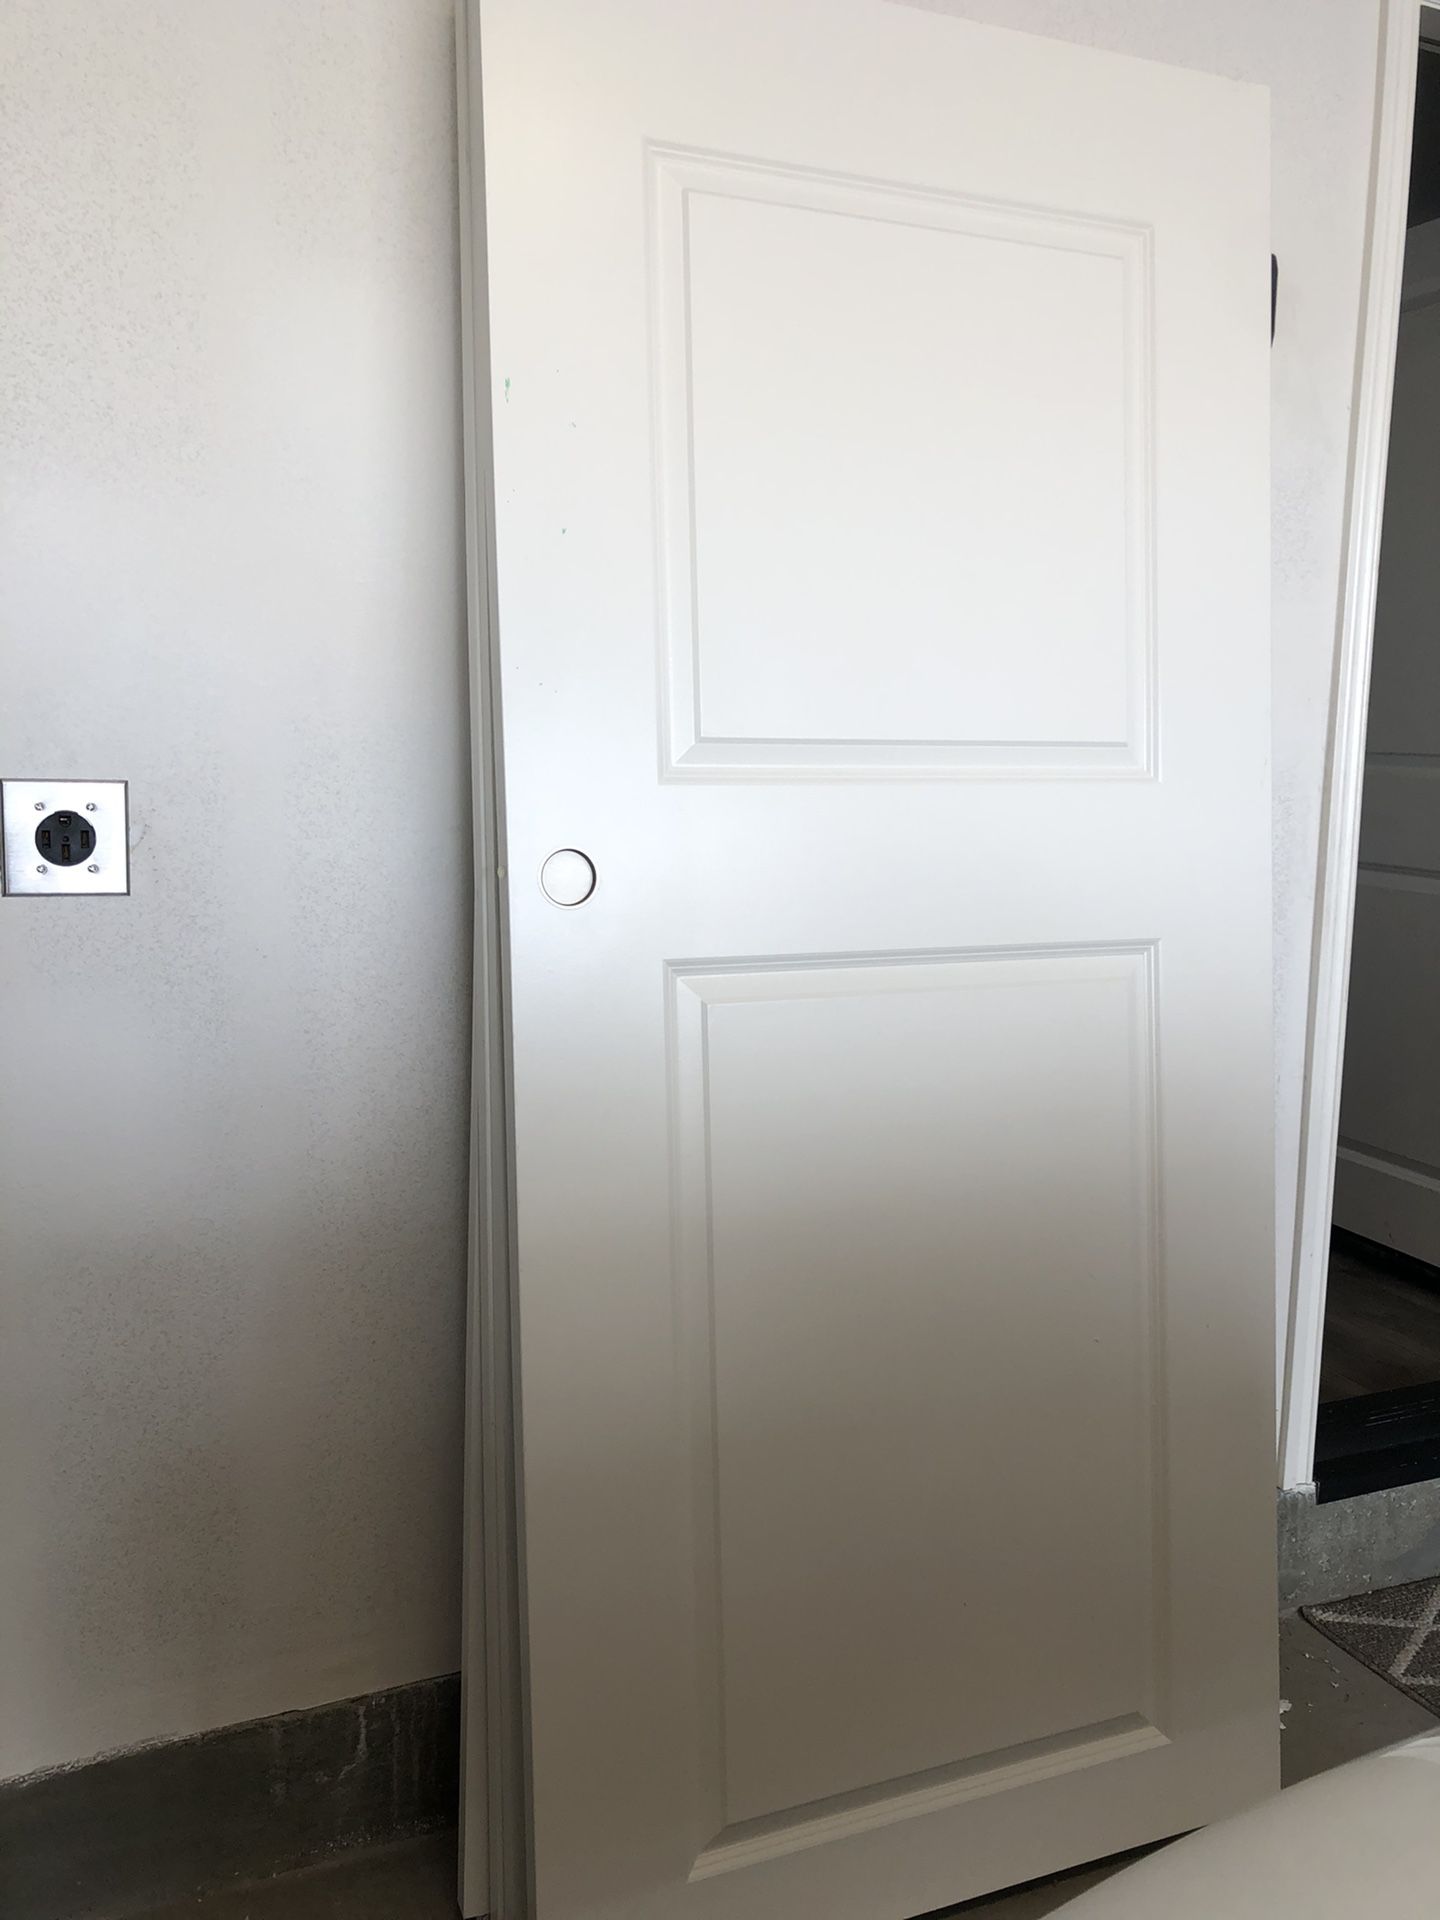 White closet doors - 4 for $20